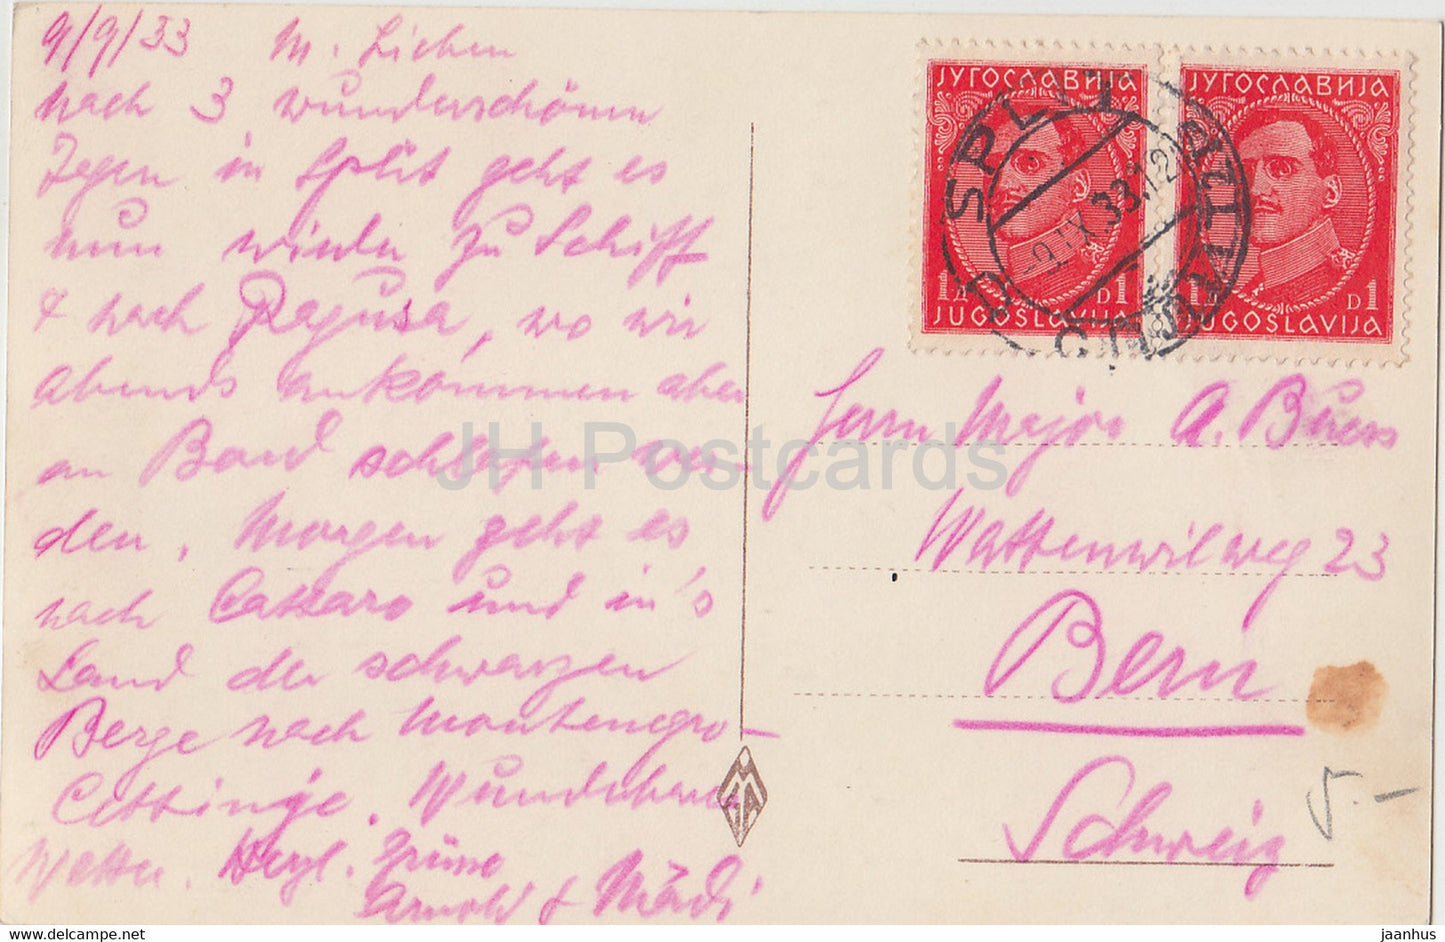 Split - Zvonik - Stolne crkve - Glockenturm - 10 - alte Postkarte - 1933 - Jugoslawien - Kroatien - gebraucht